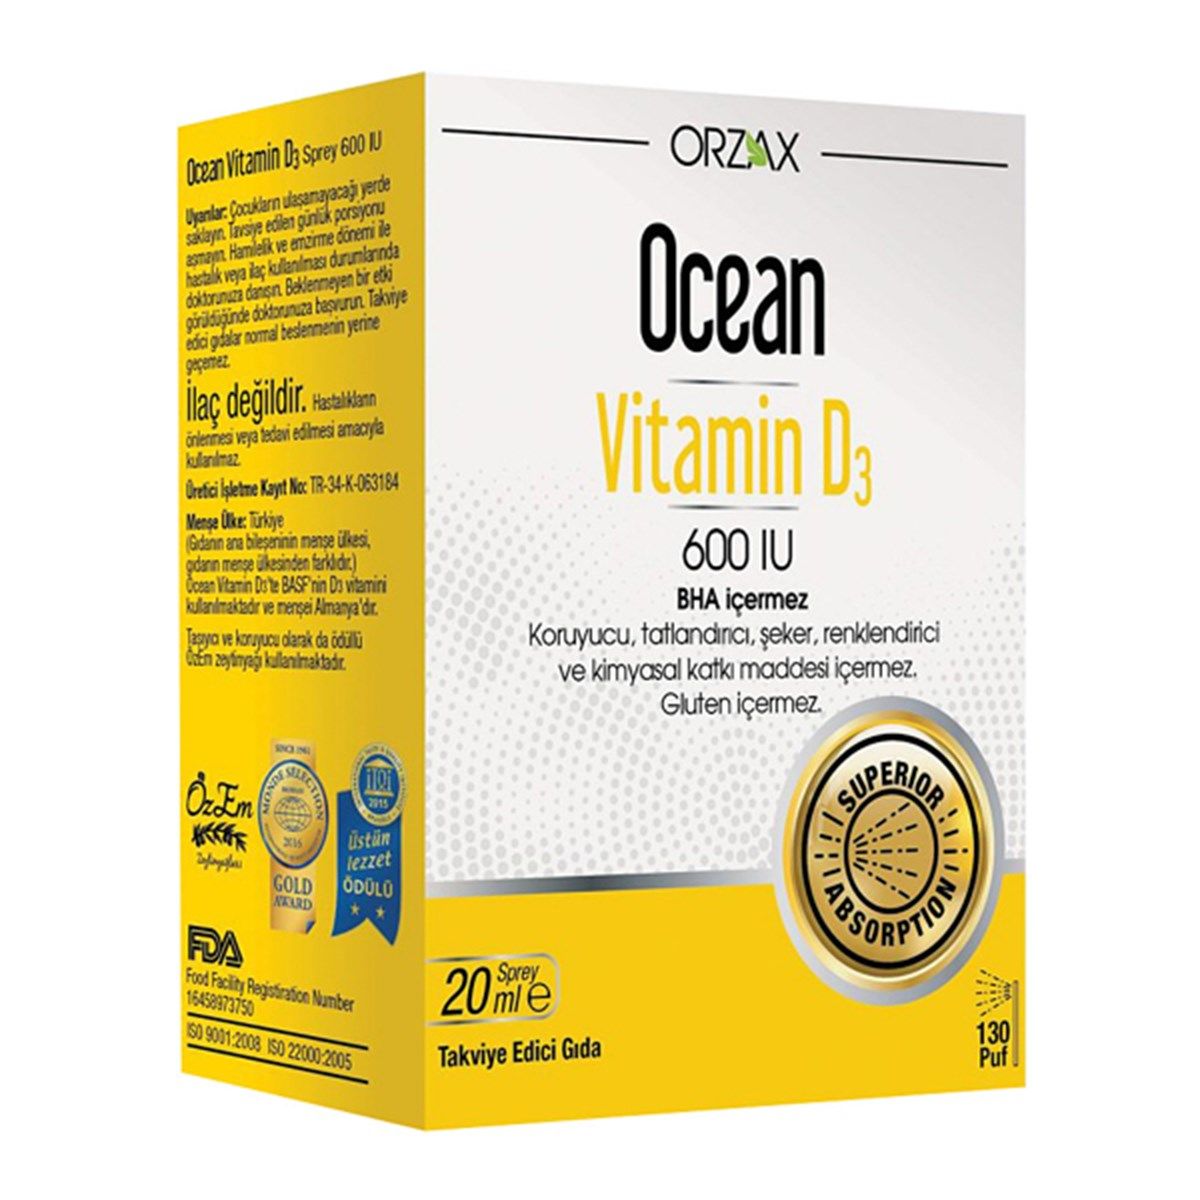 Ocean Vitamin D3 600 IU 20 mL